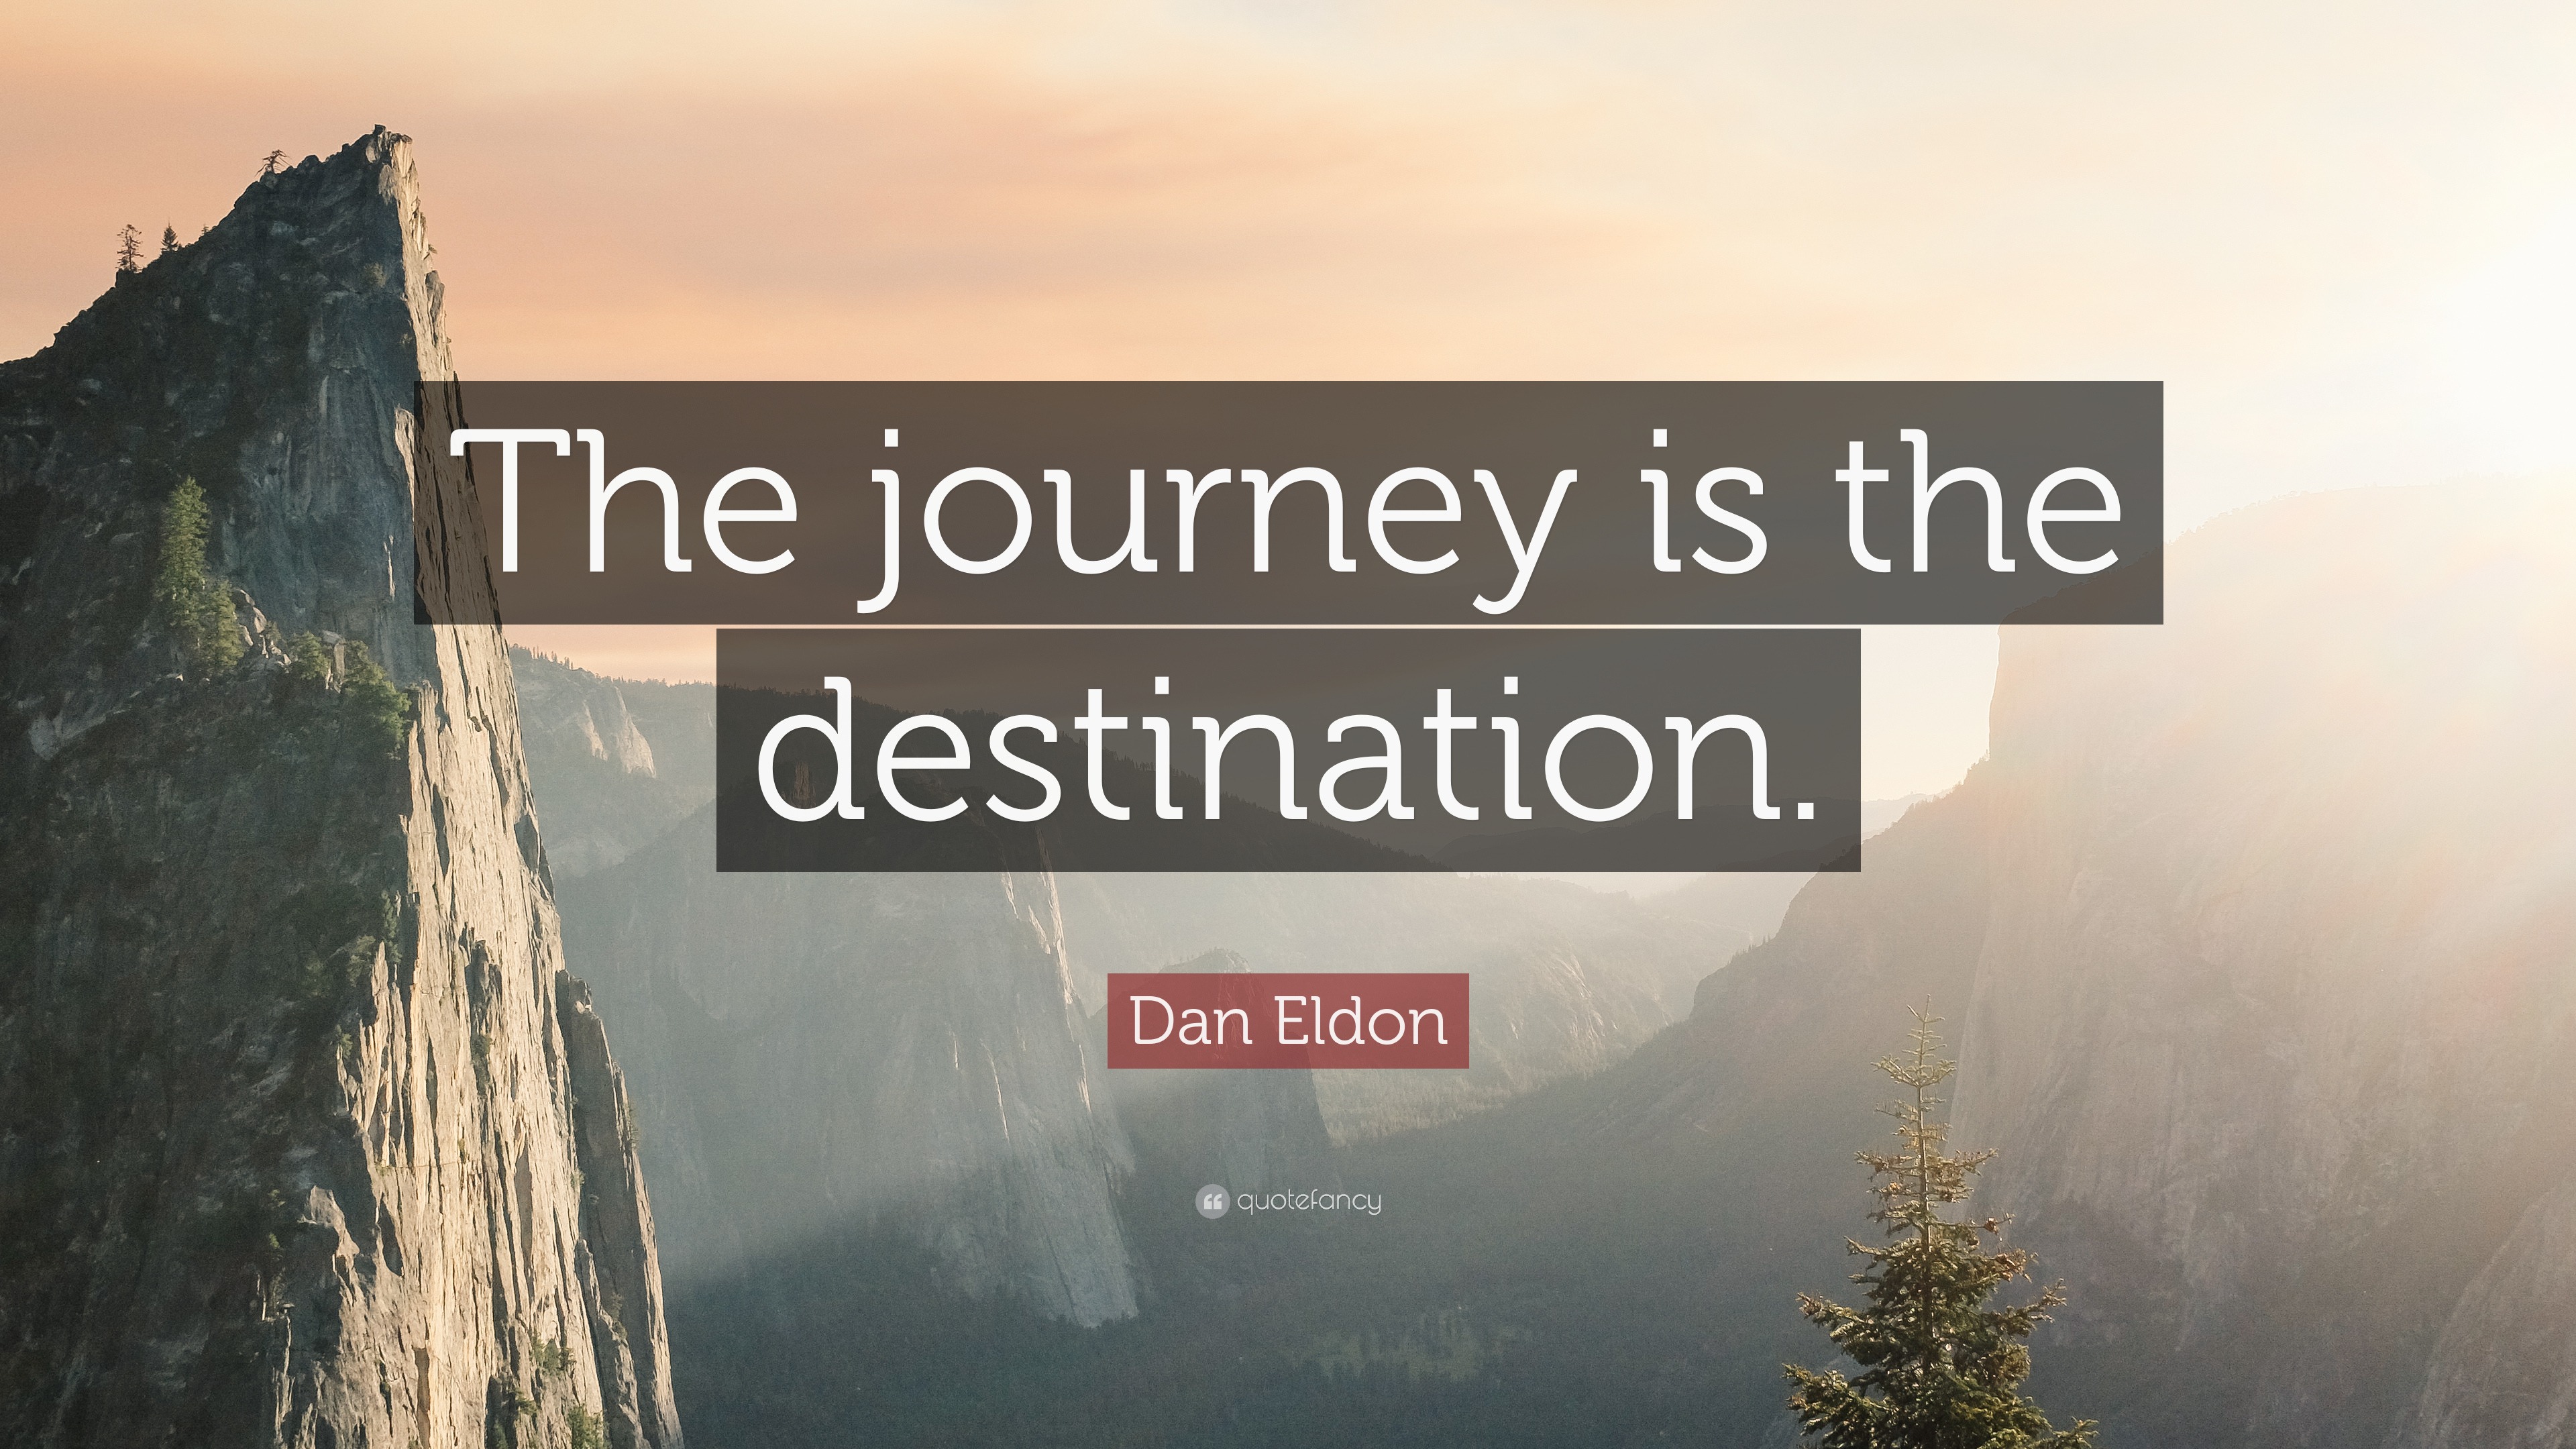 Dan Eldon Quote: “The journey is the destination.”